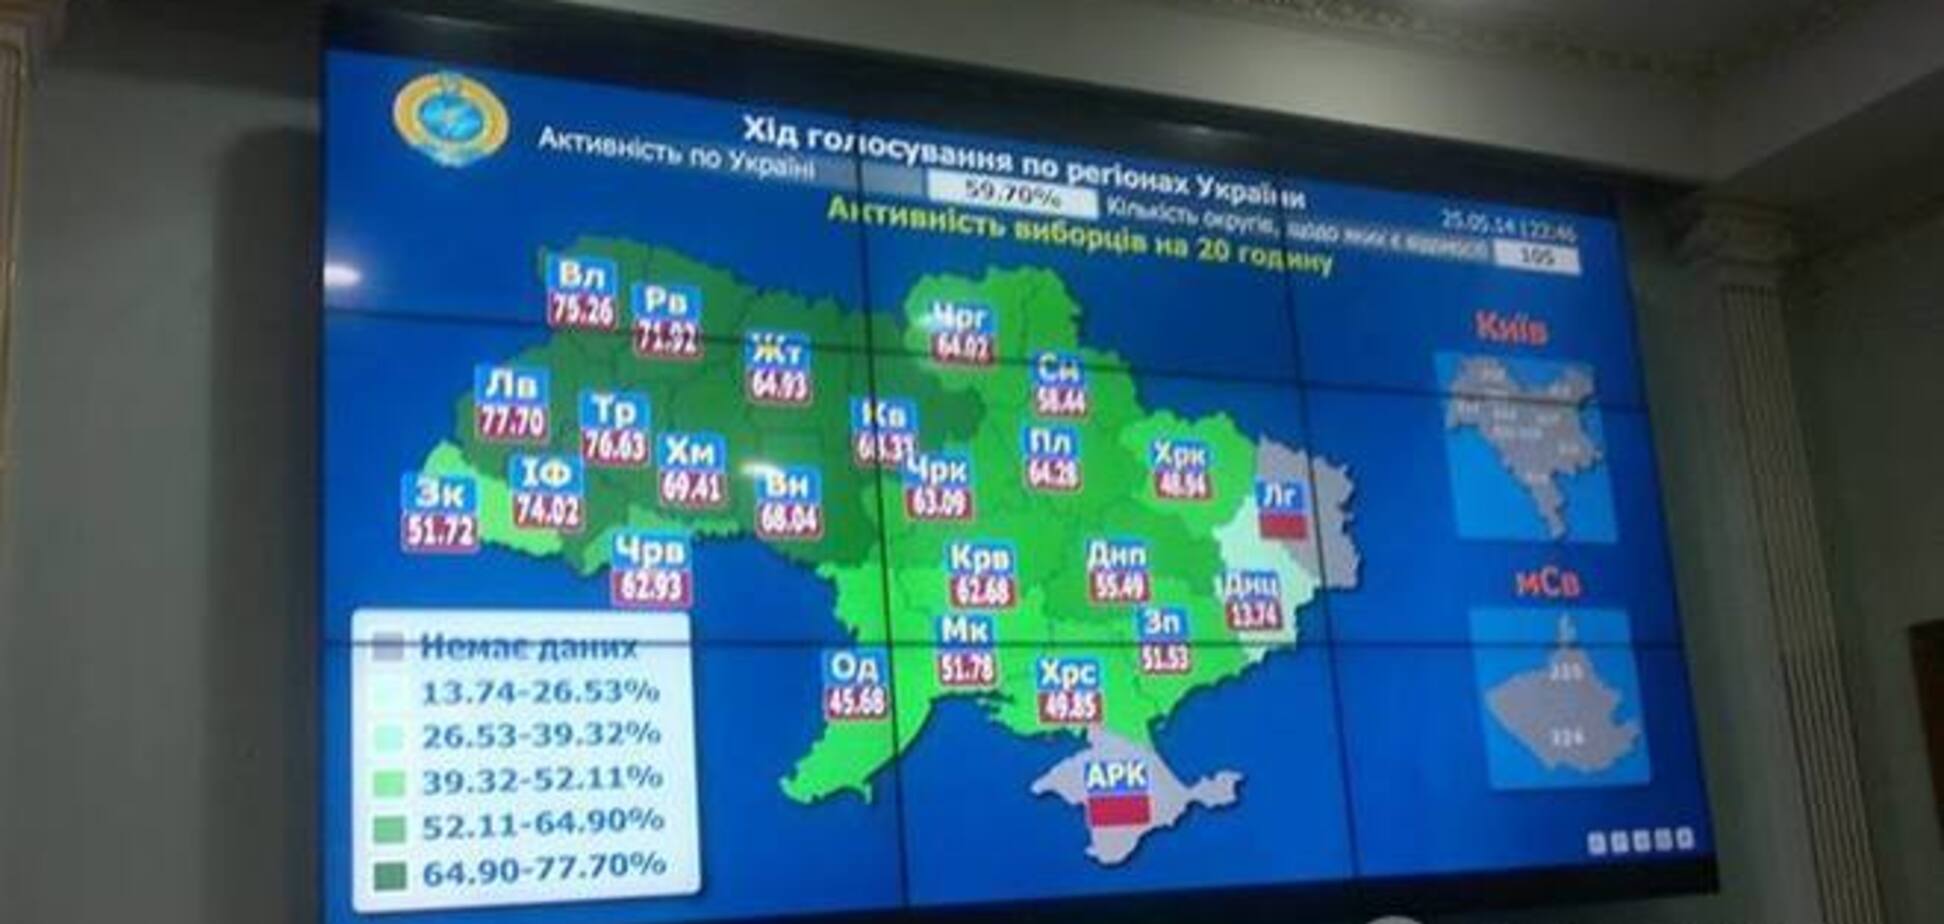 Явка избирателей по Украине на 20:00 составила 60,54% - ЦИК